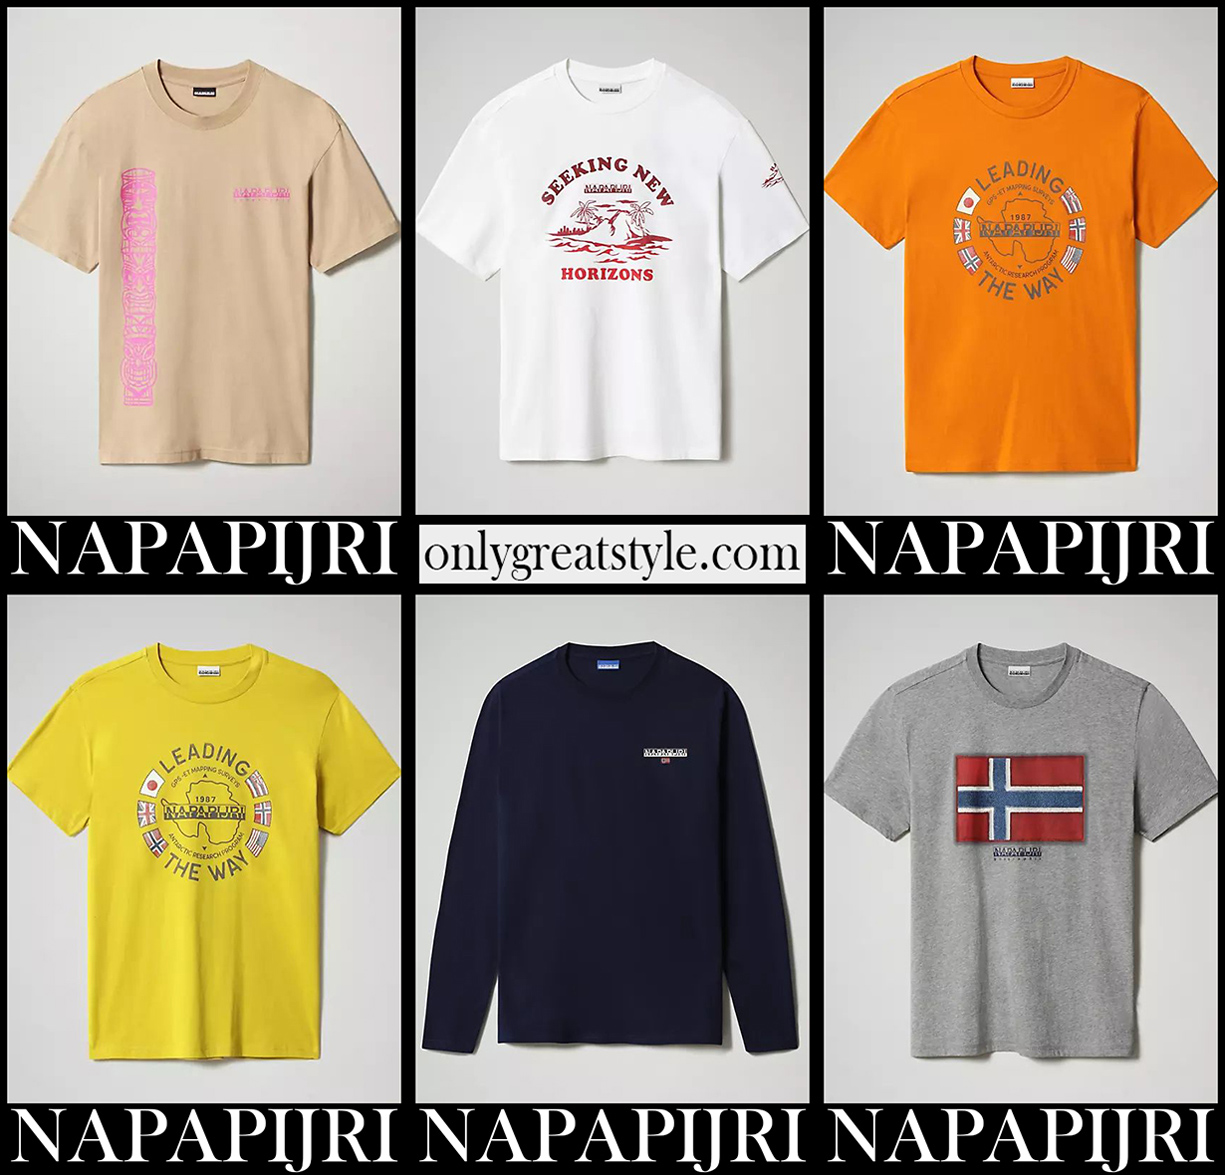 Napapijri t shirts 2021 new arrivals mens fashion clothing